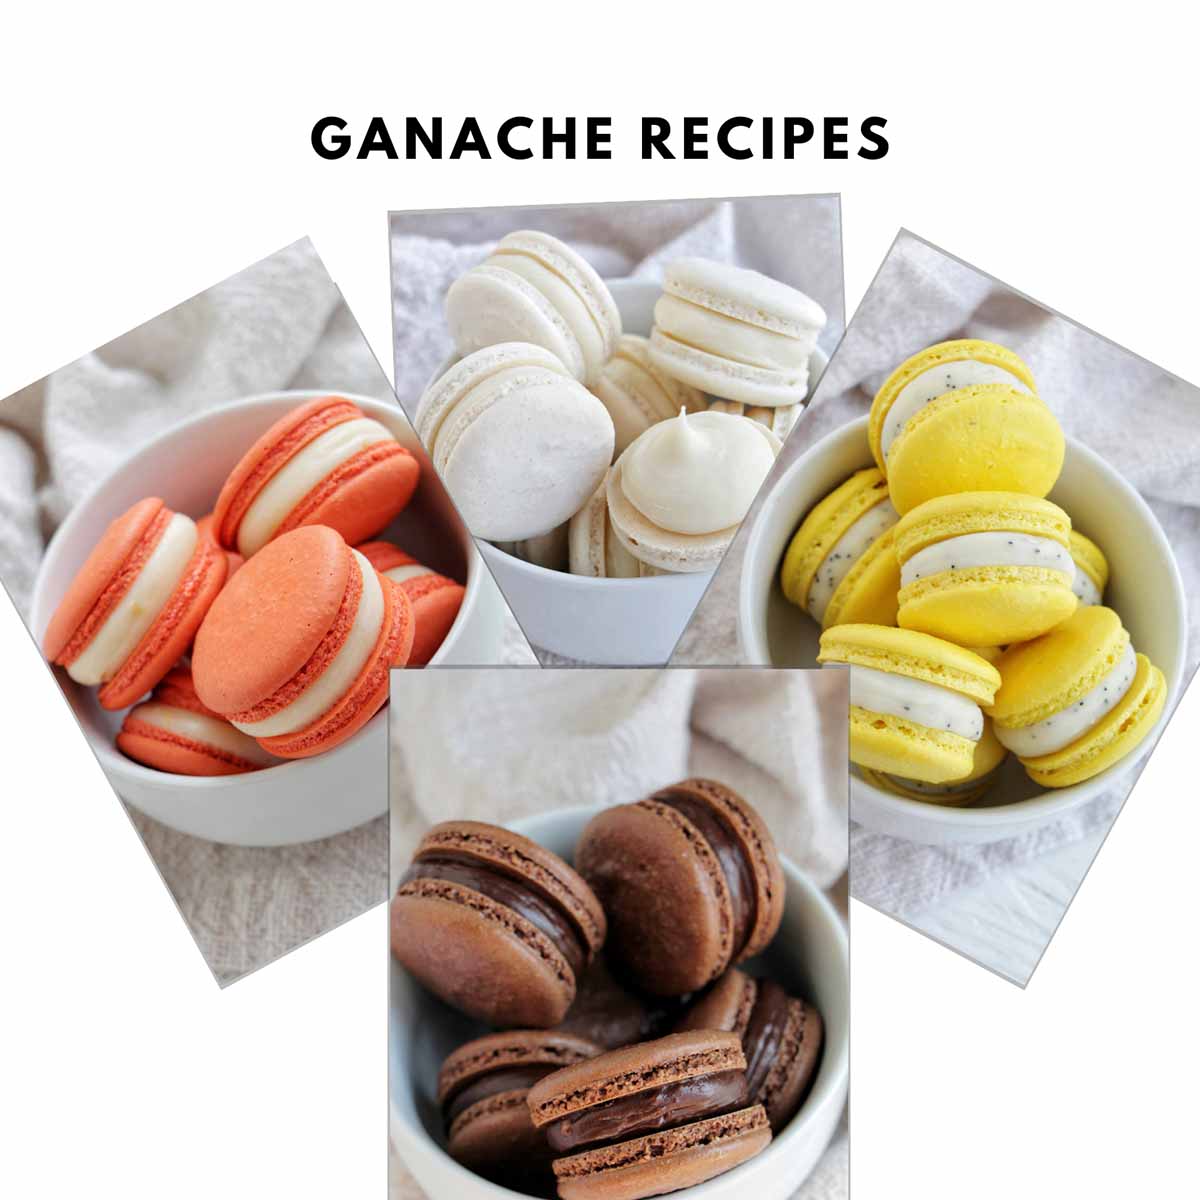 Various ganache filled macarons.